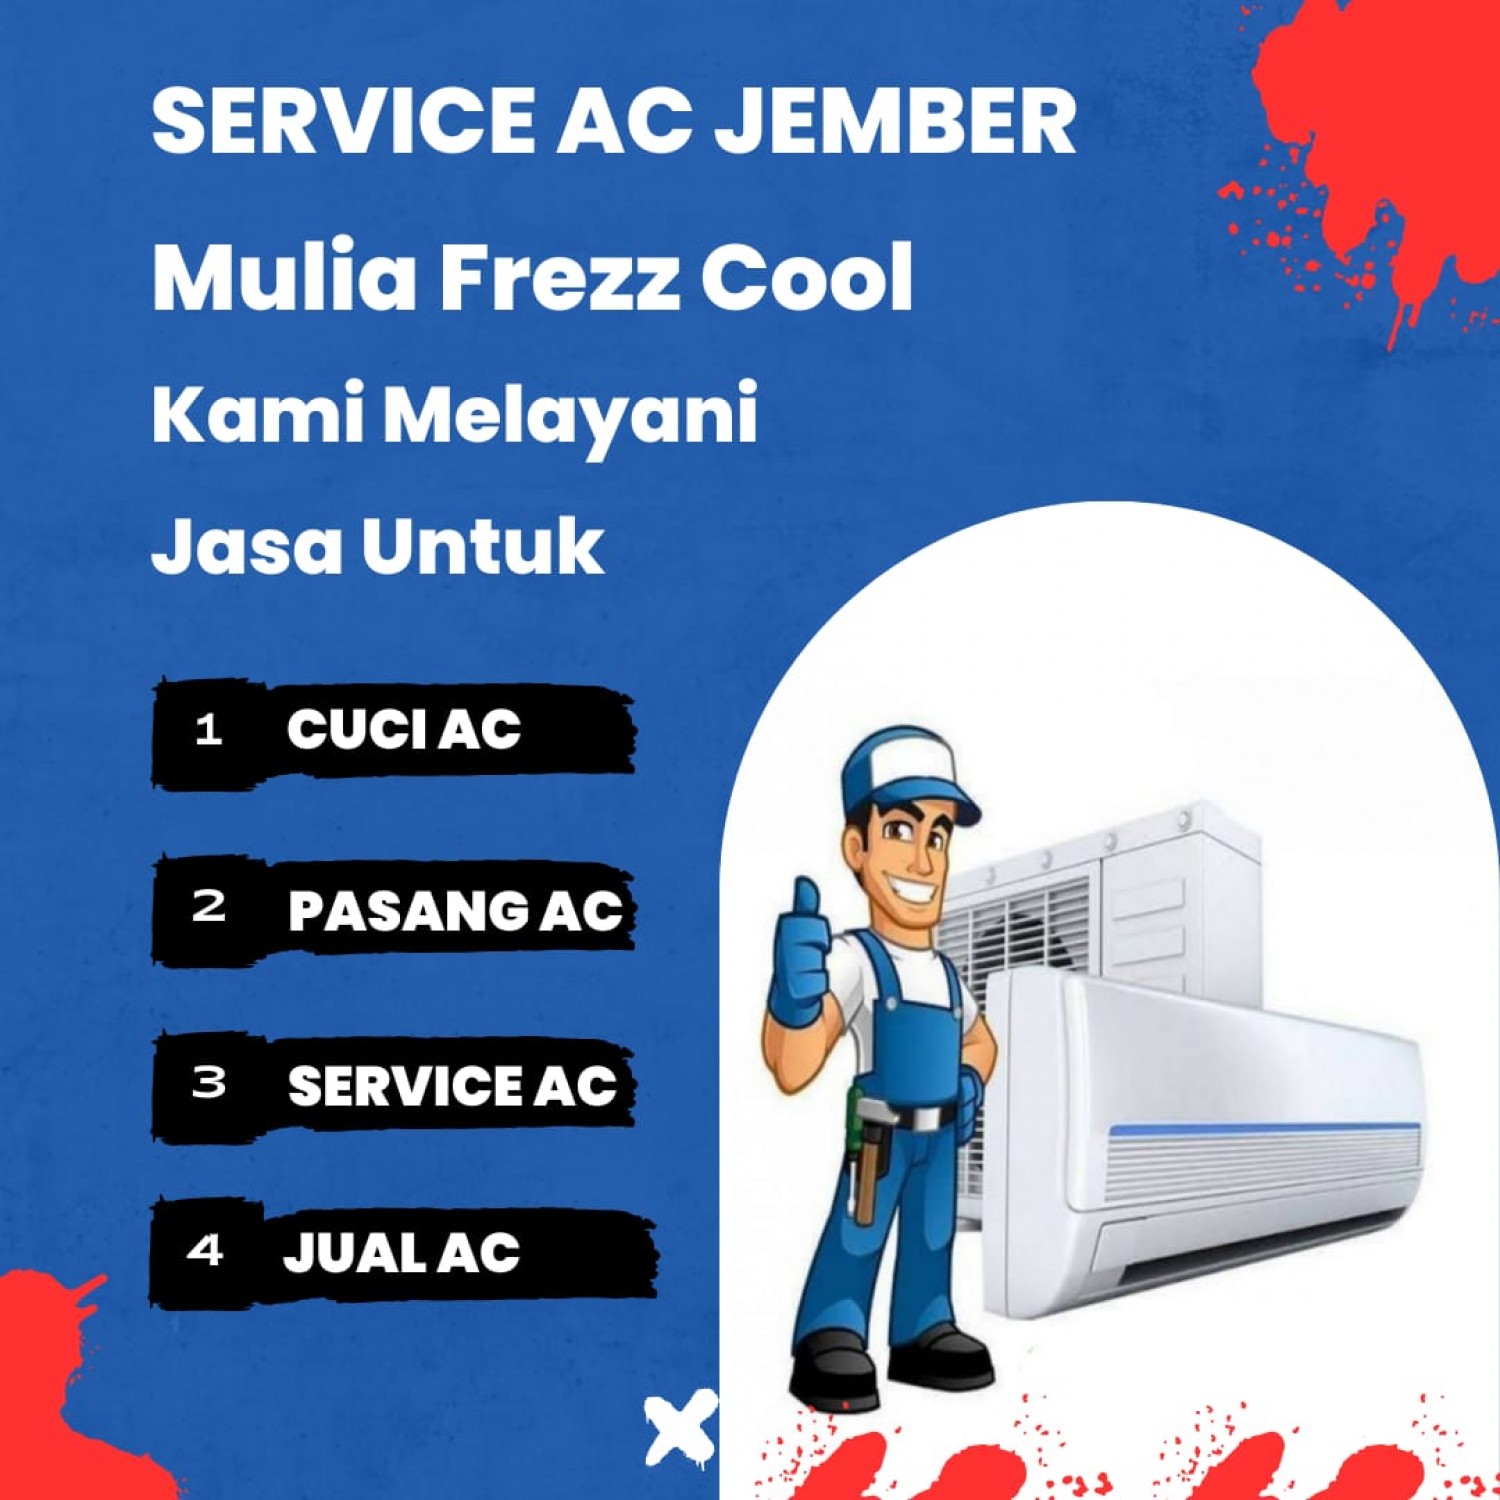 Service AC Kalisat Jember